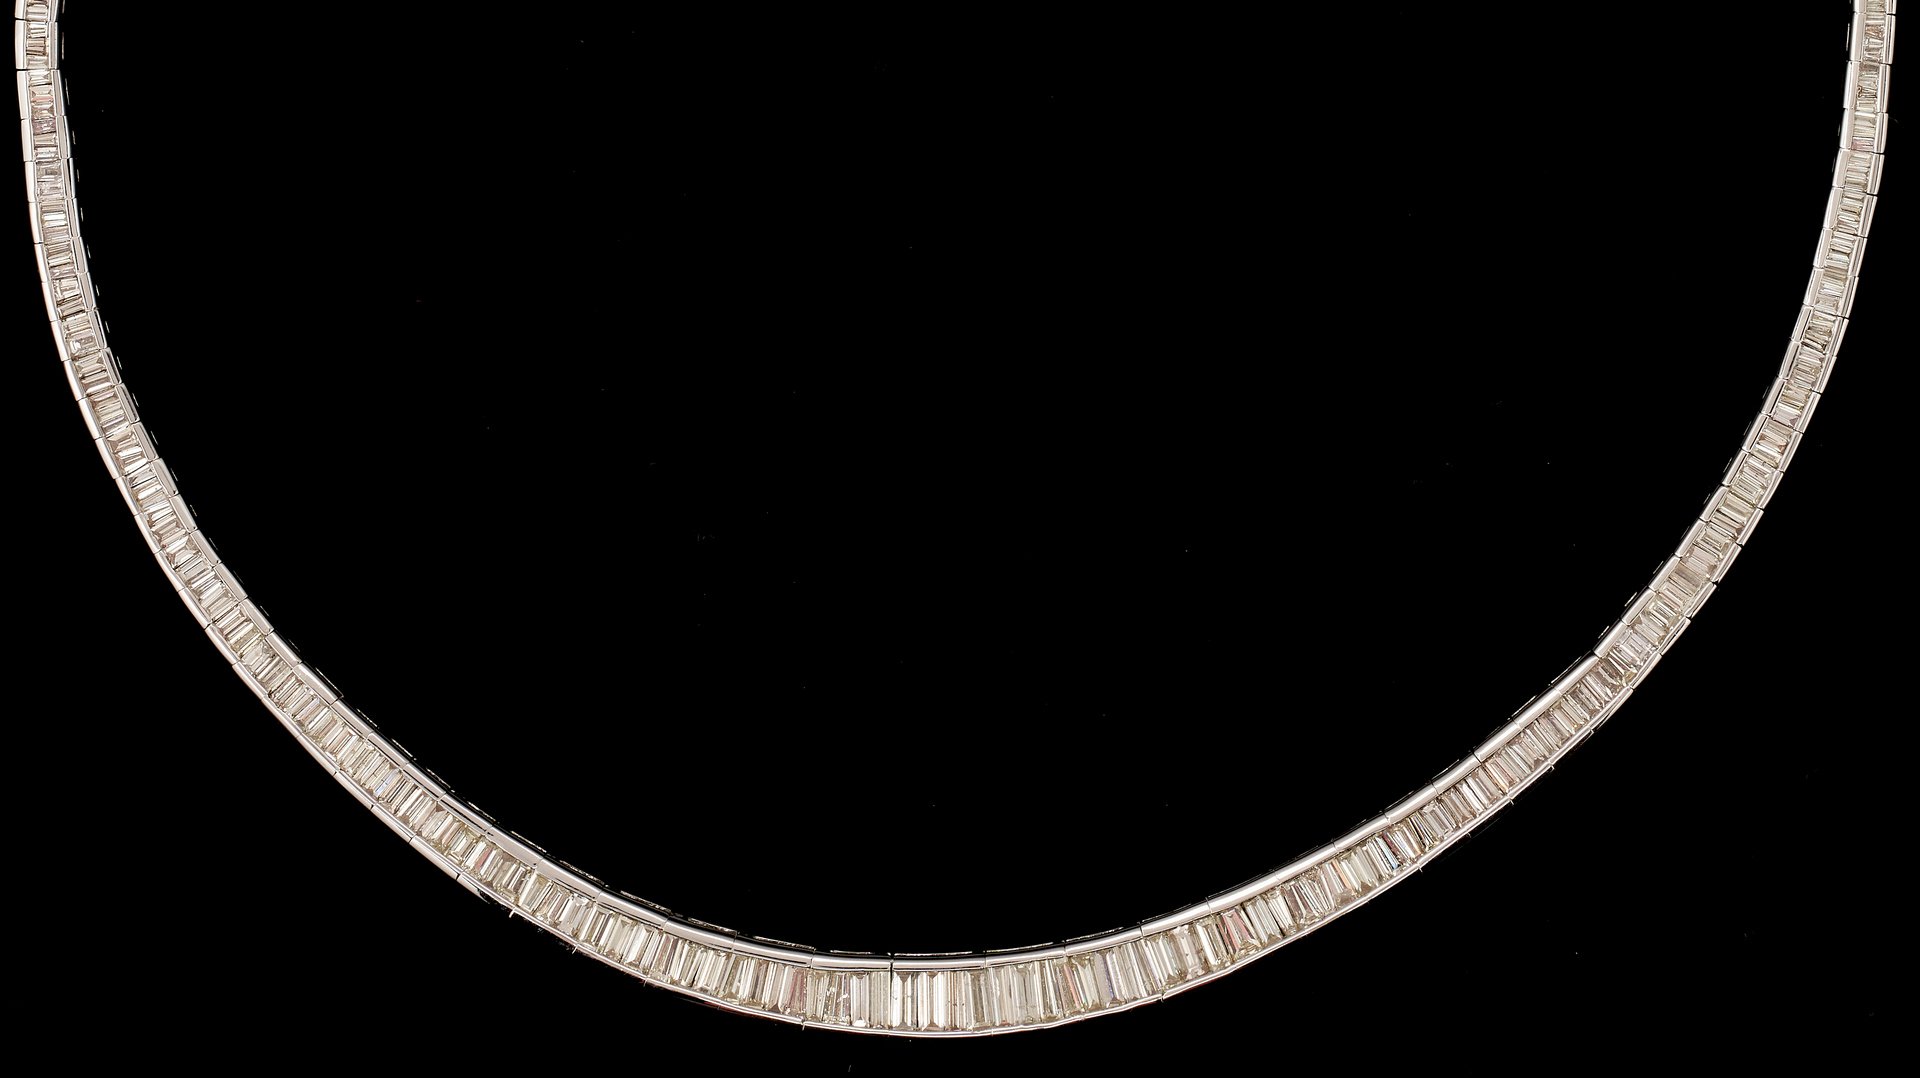 Lot 68: Ladies 18K Rivera Design Graduated Diamond Necklace